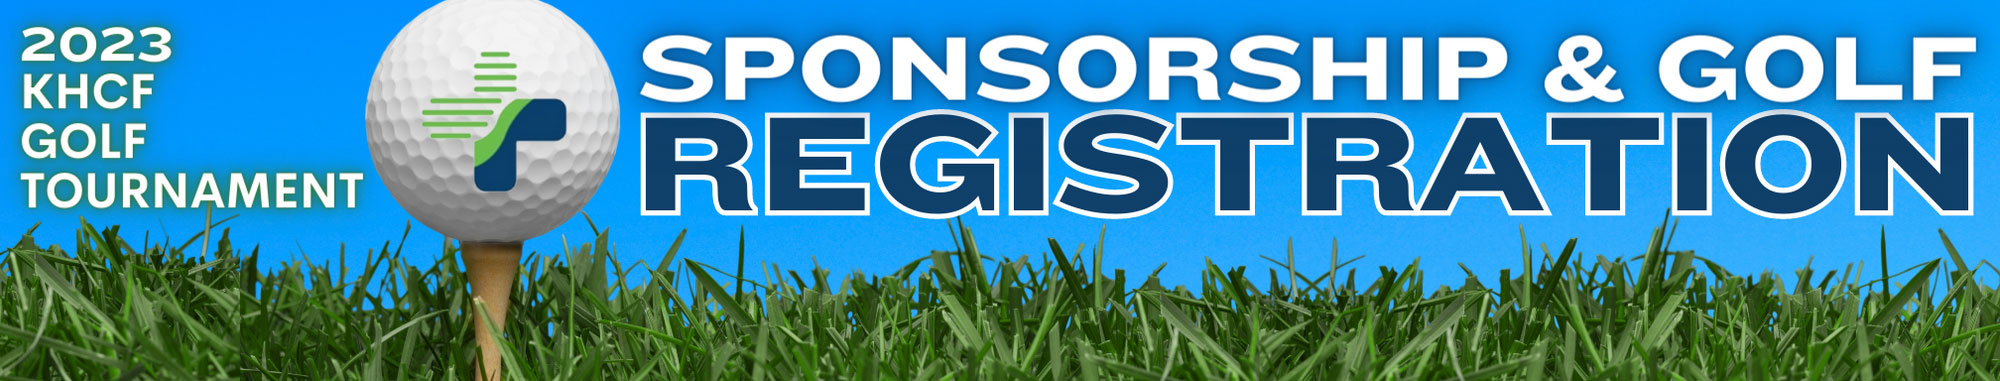 2023 KCHF Golf Tournament Sponsorship & Golf Registration